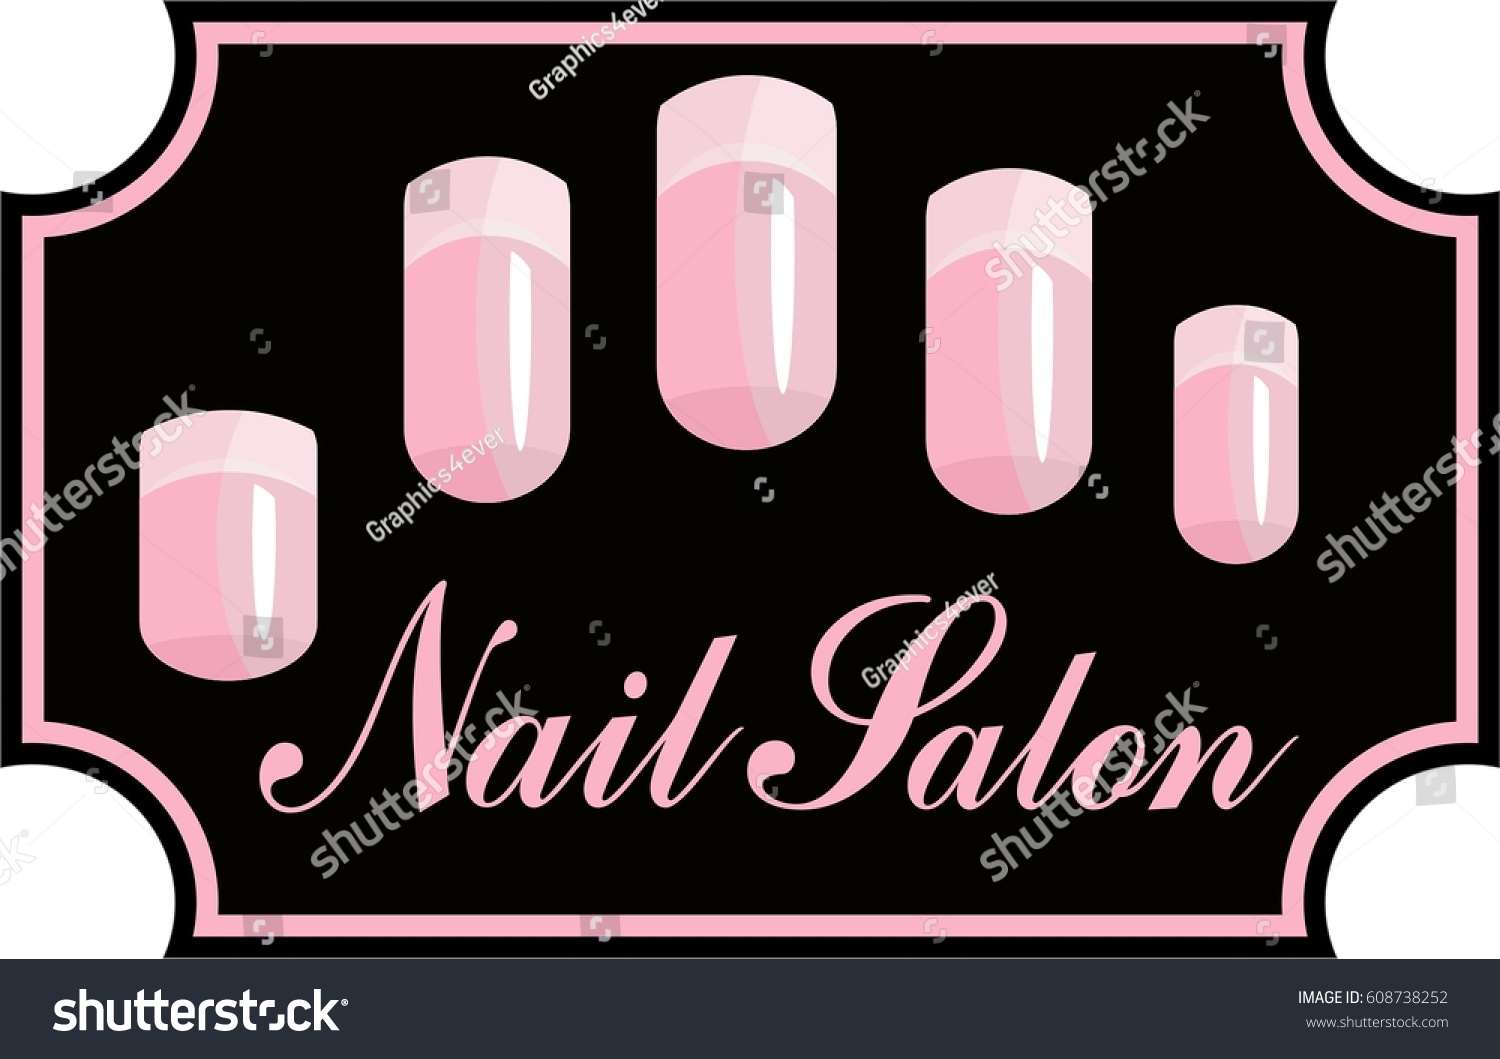 2. Nail Salon Logo Design - wide 8